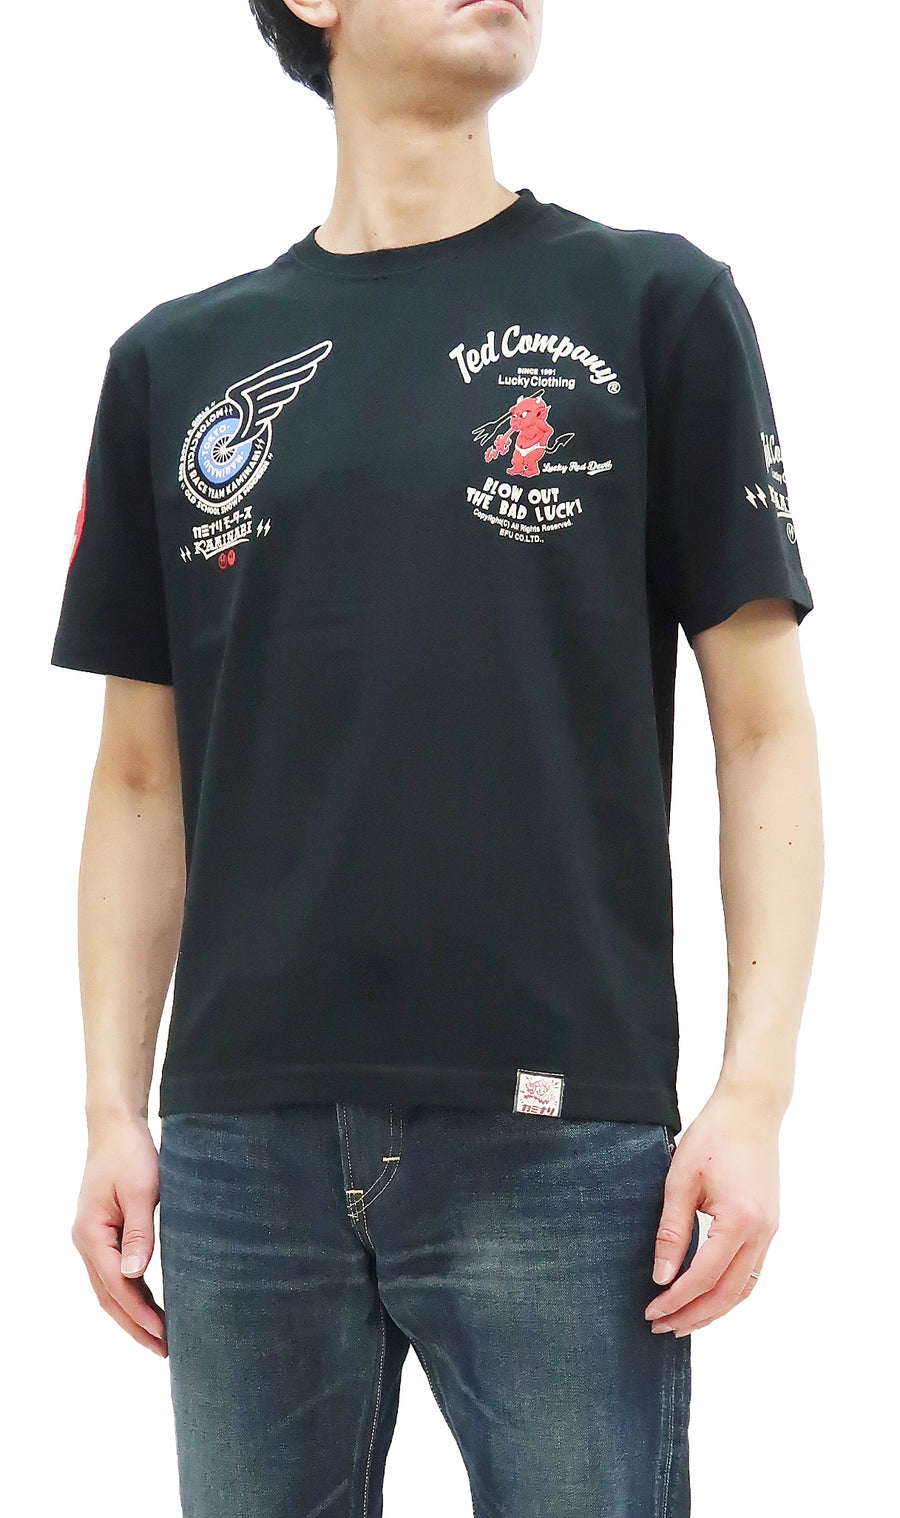 Tedman T-shirt Men's Kaminari x Lucky Devil Motorcycle Graphic Short Sleeve Tee TDKMT-17 Black